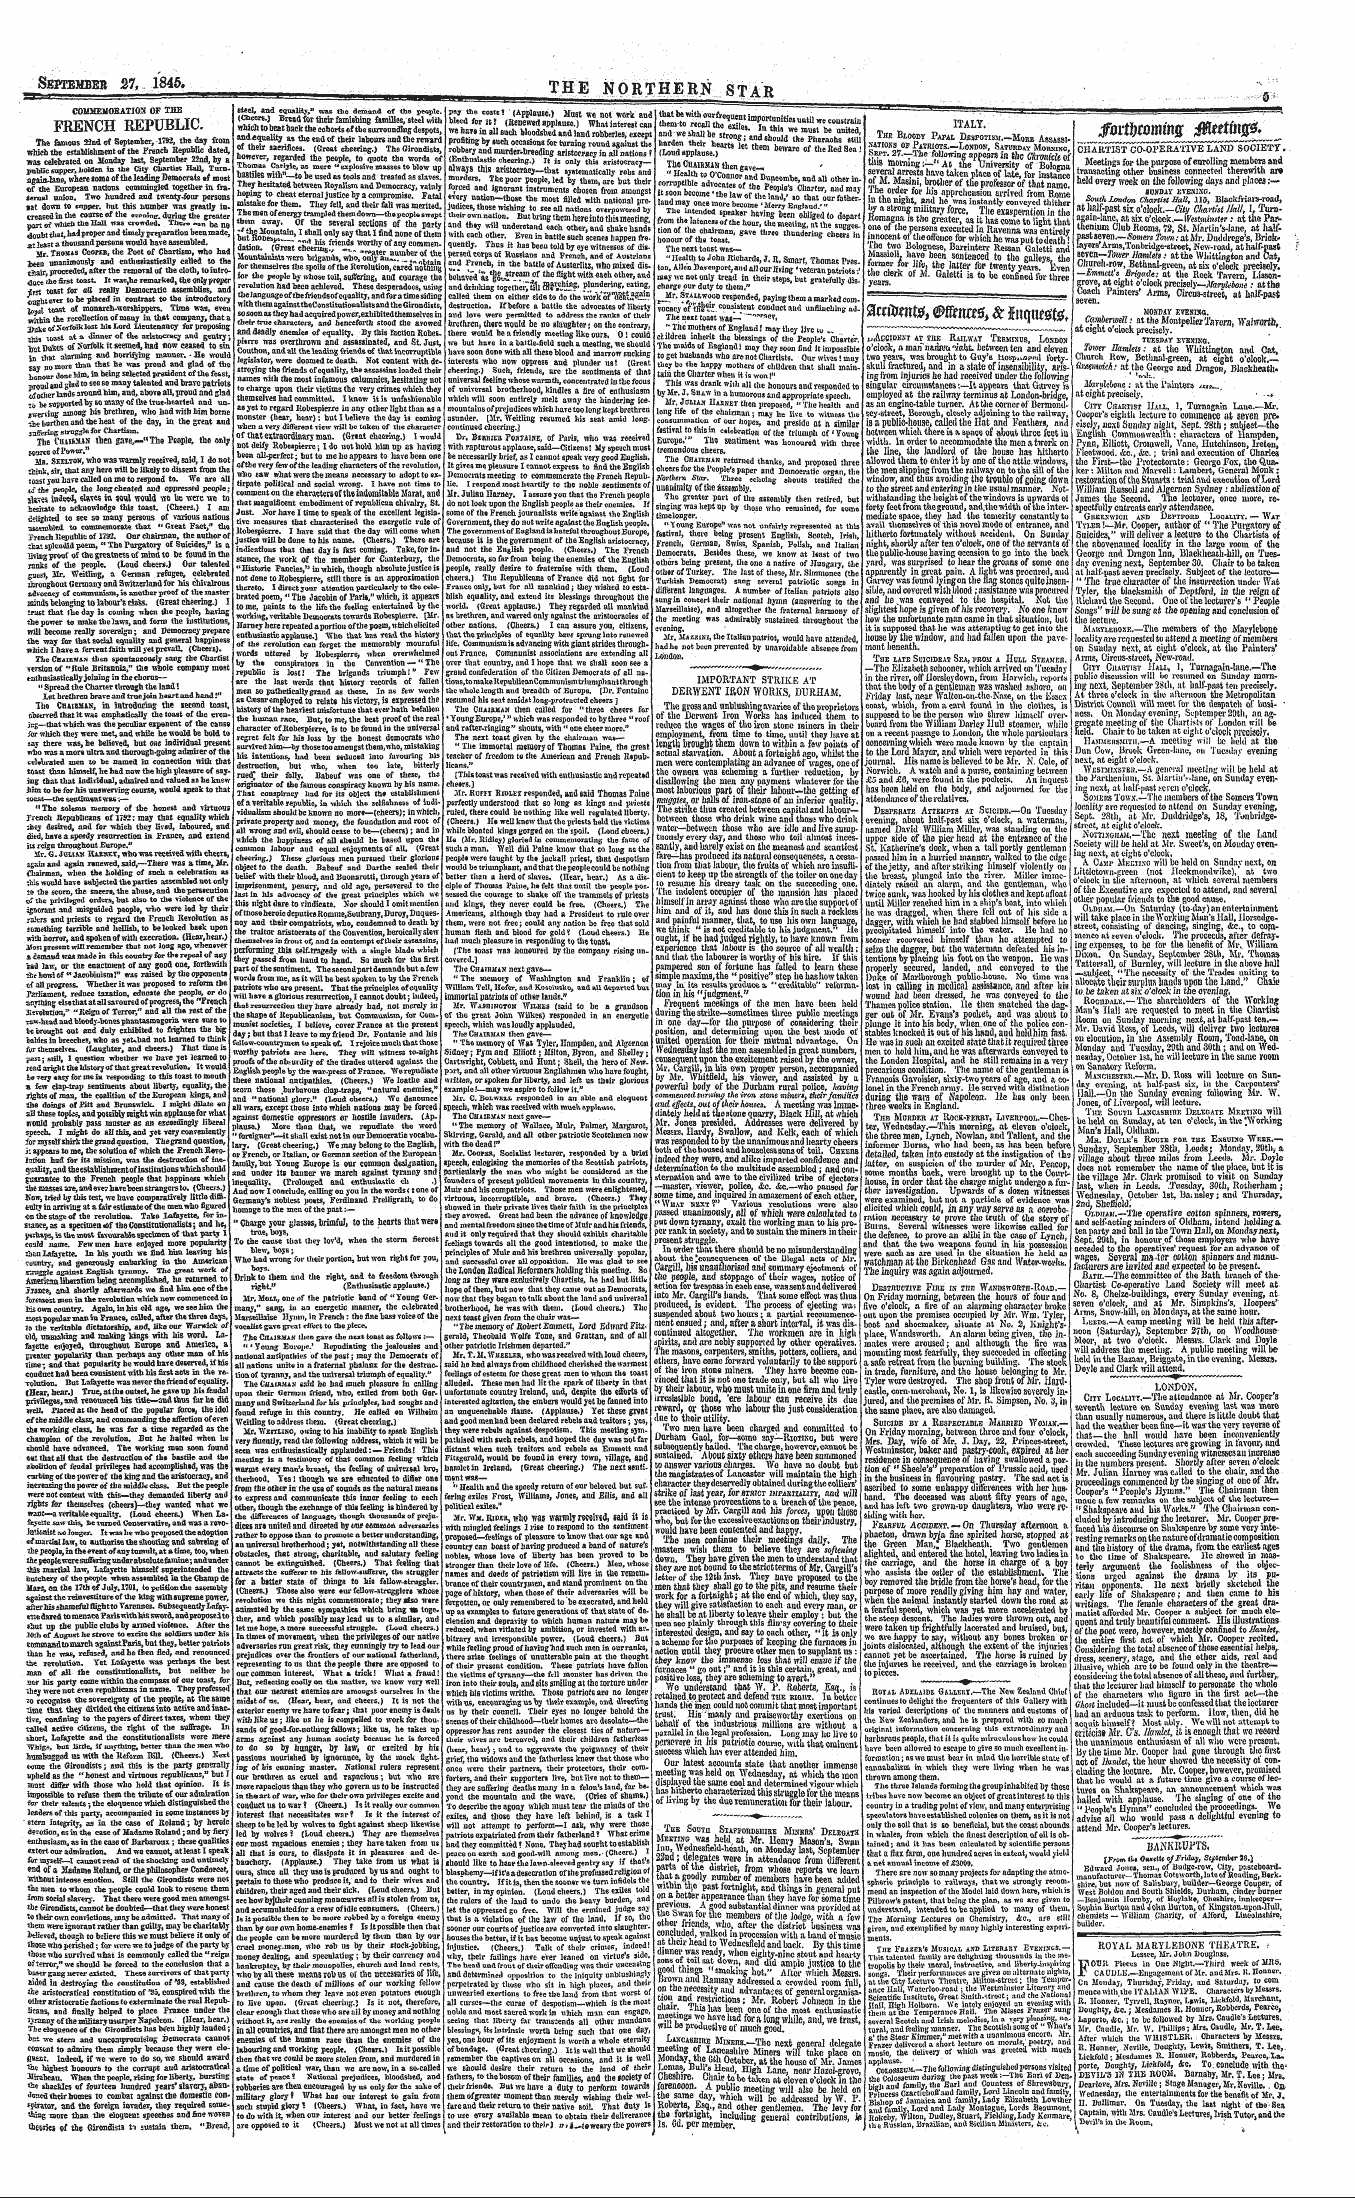 Northern Star (1837-1852): jS F Y, 3rd edition: 5